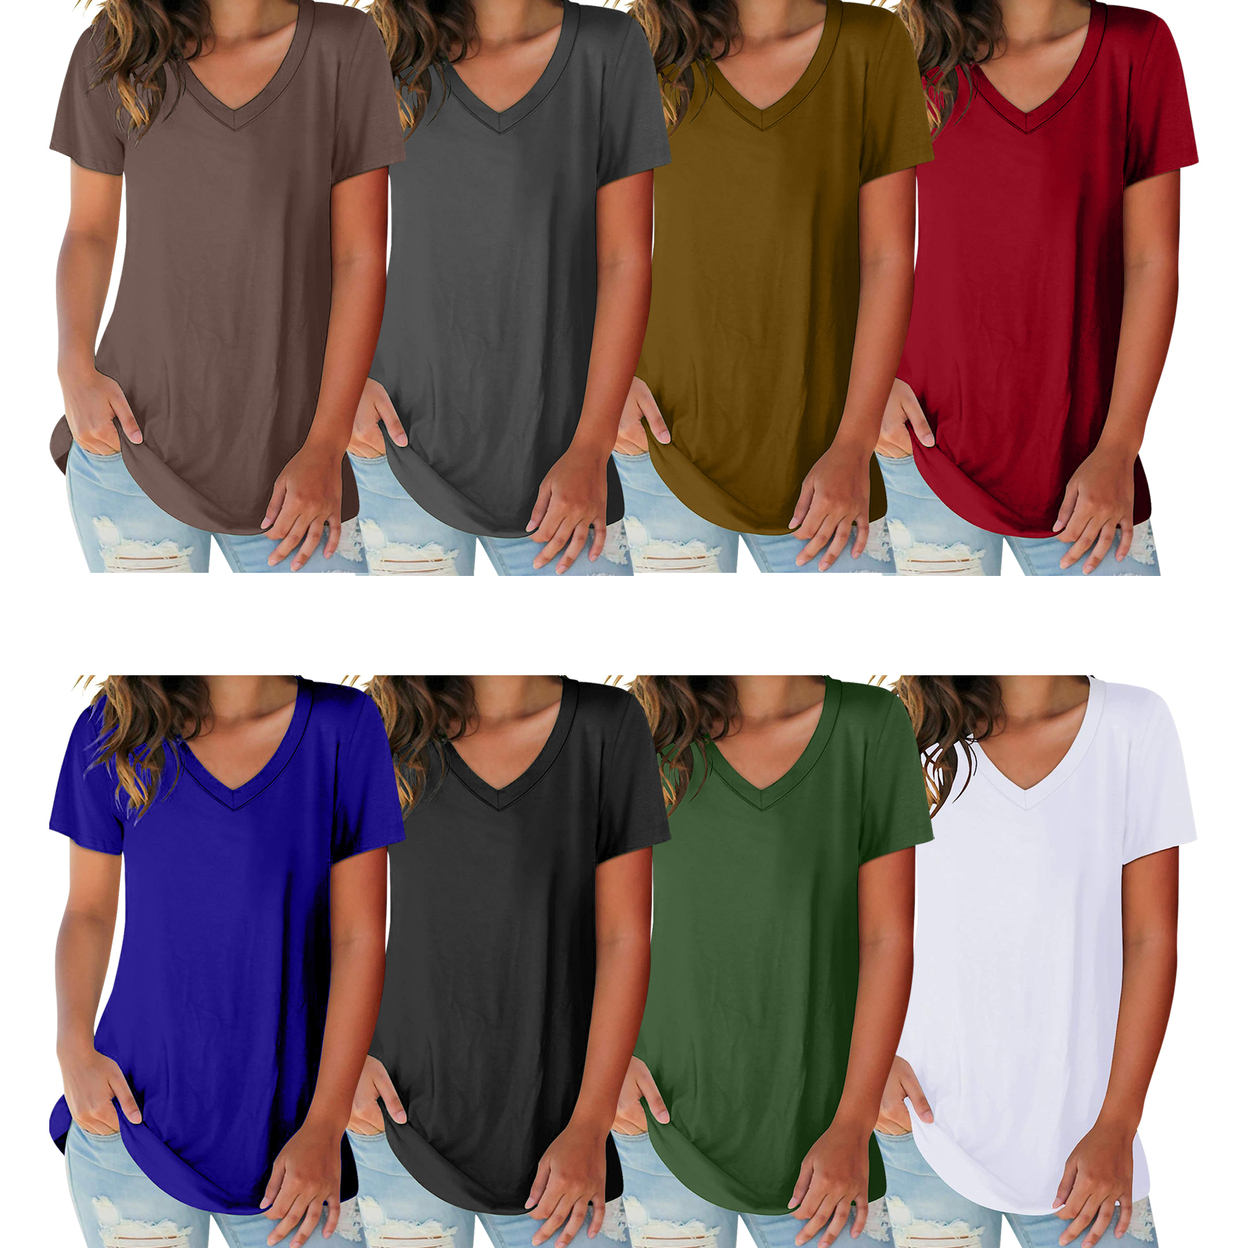 Women's Ultra-Soft Smooth Cotton Blend Basic V-Neck Short Sleeve Shirts - Red, Large